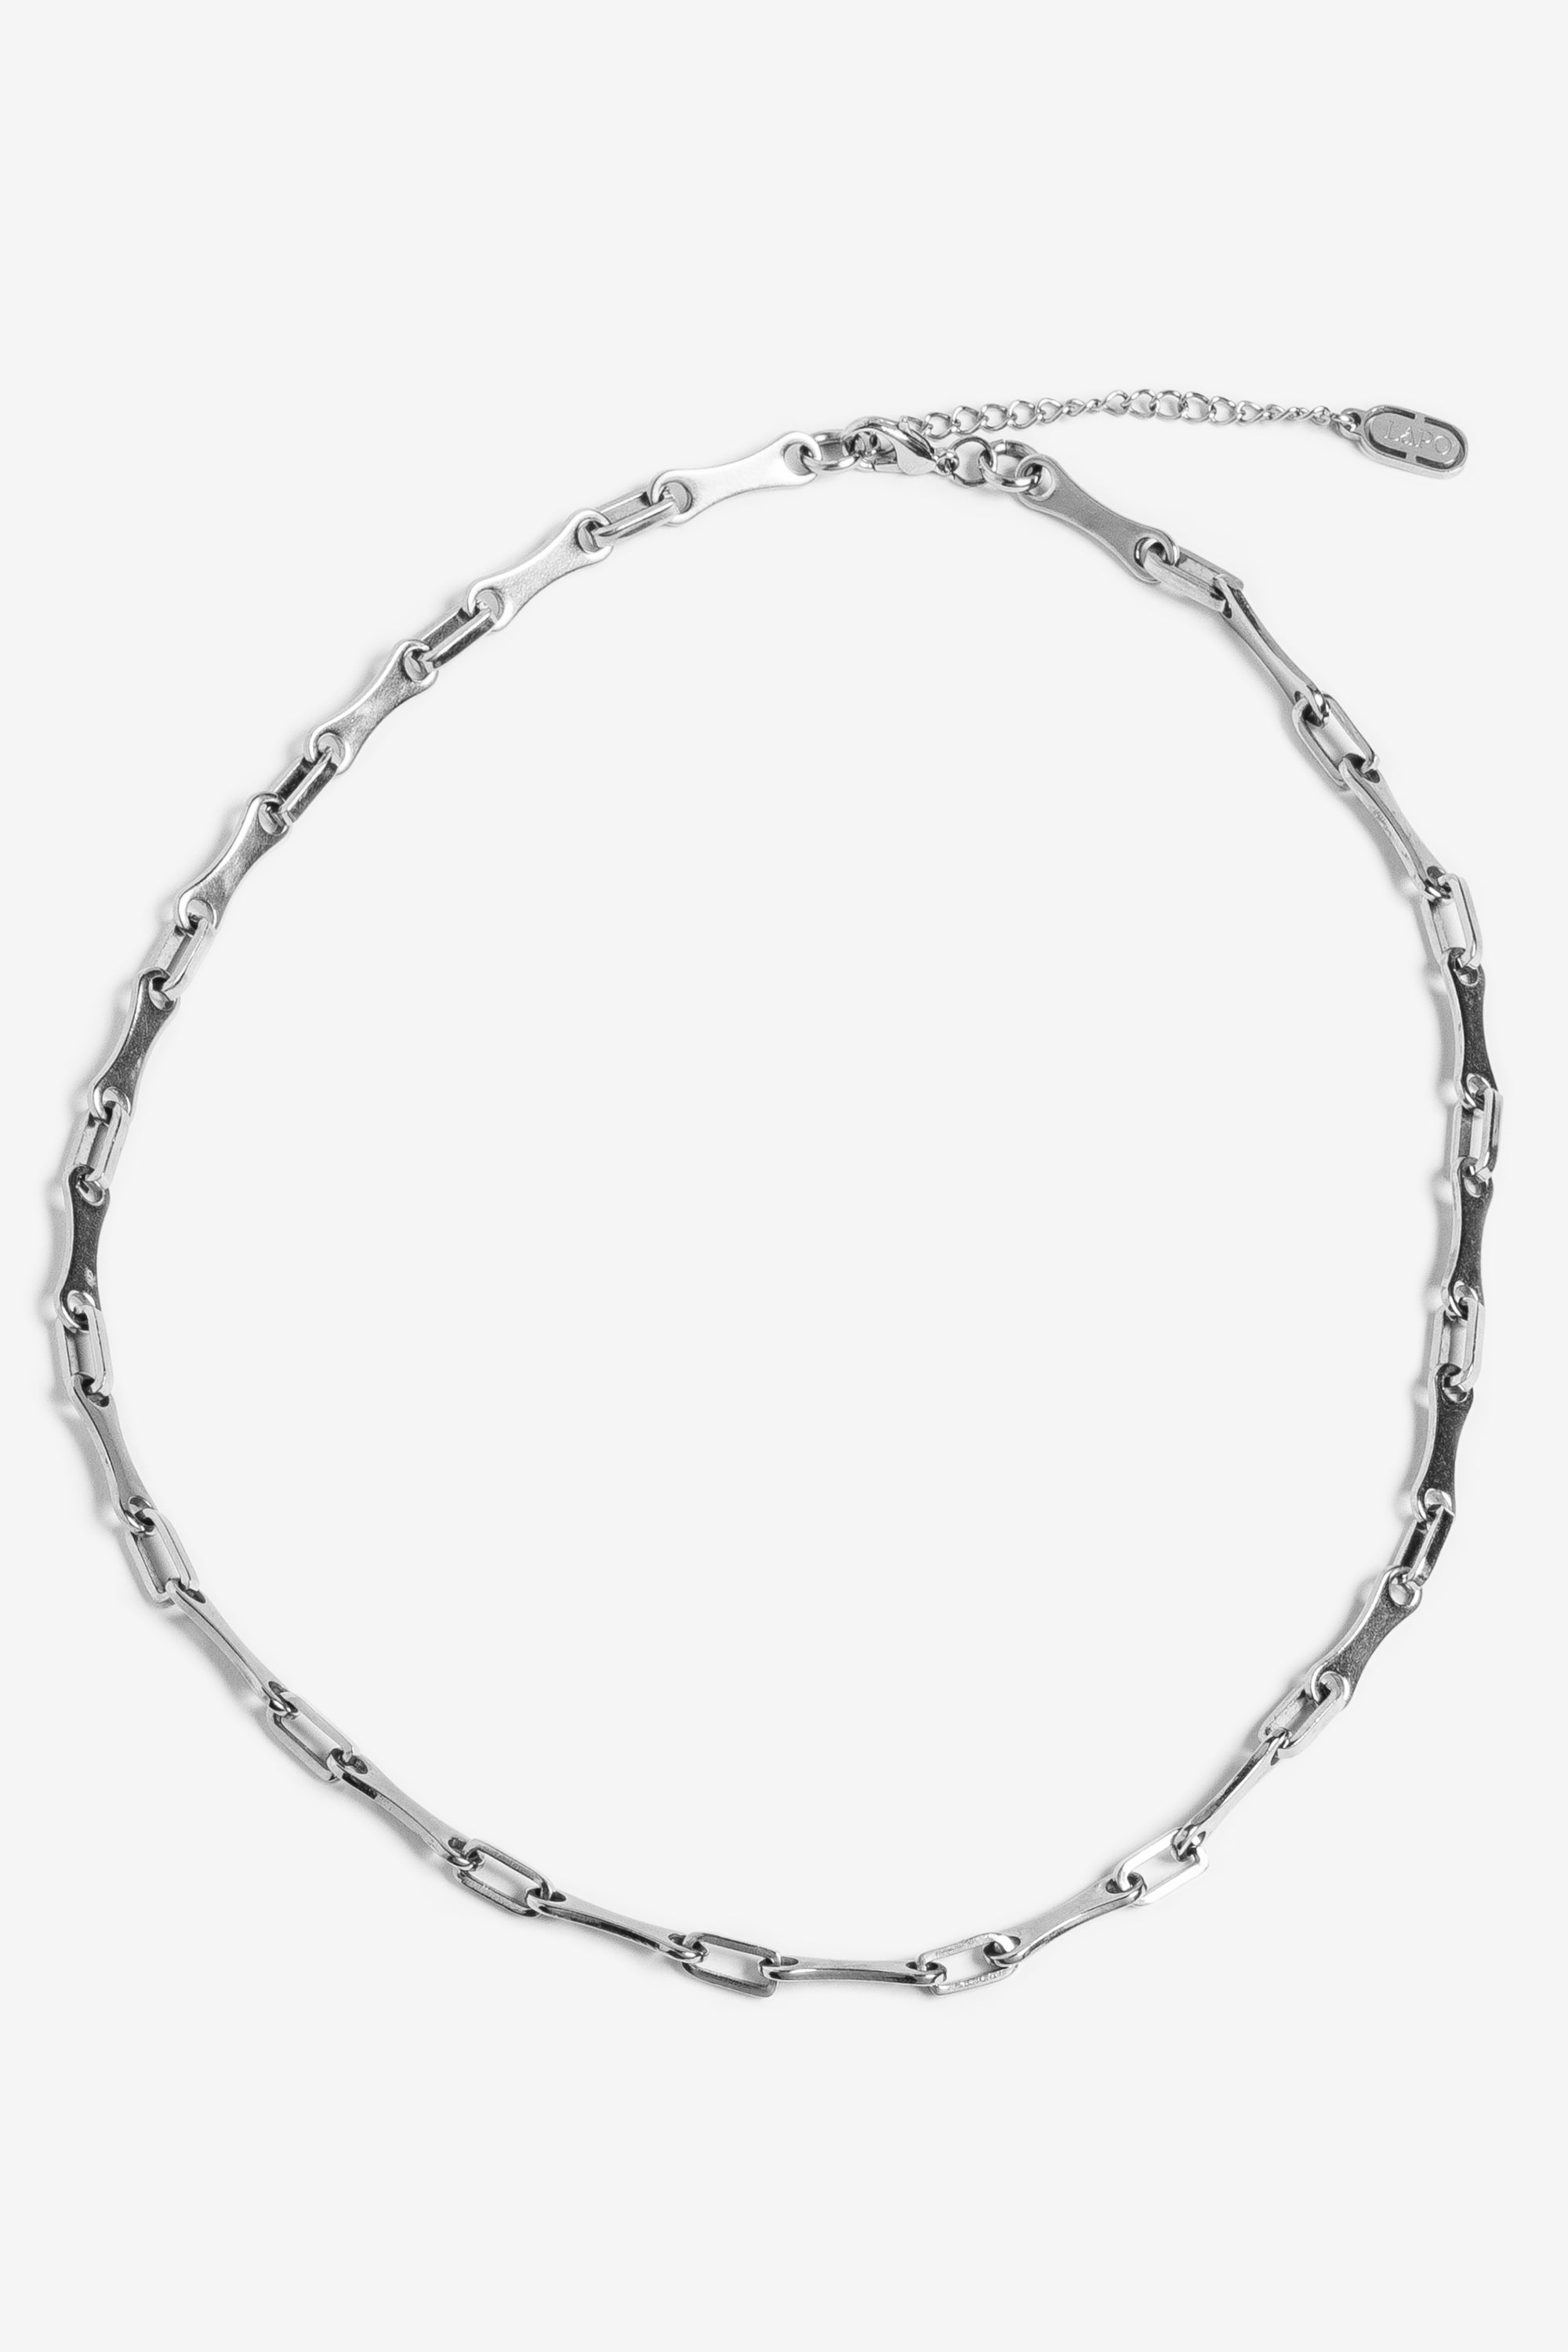 Titania Silver Necklace